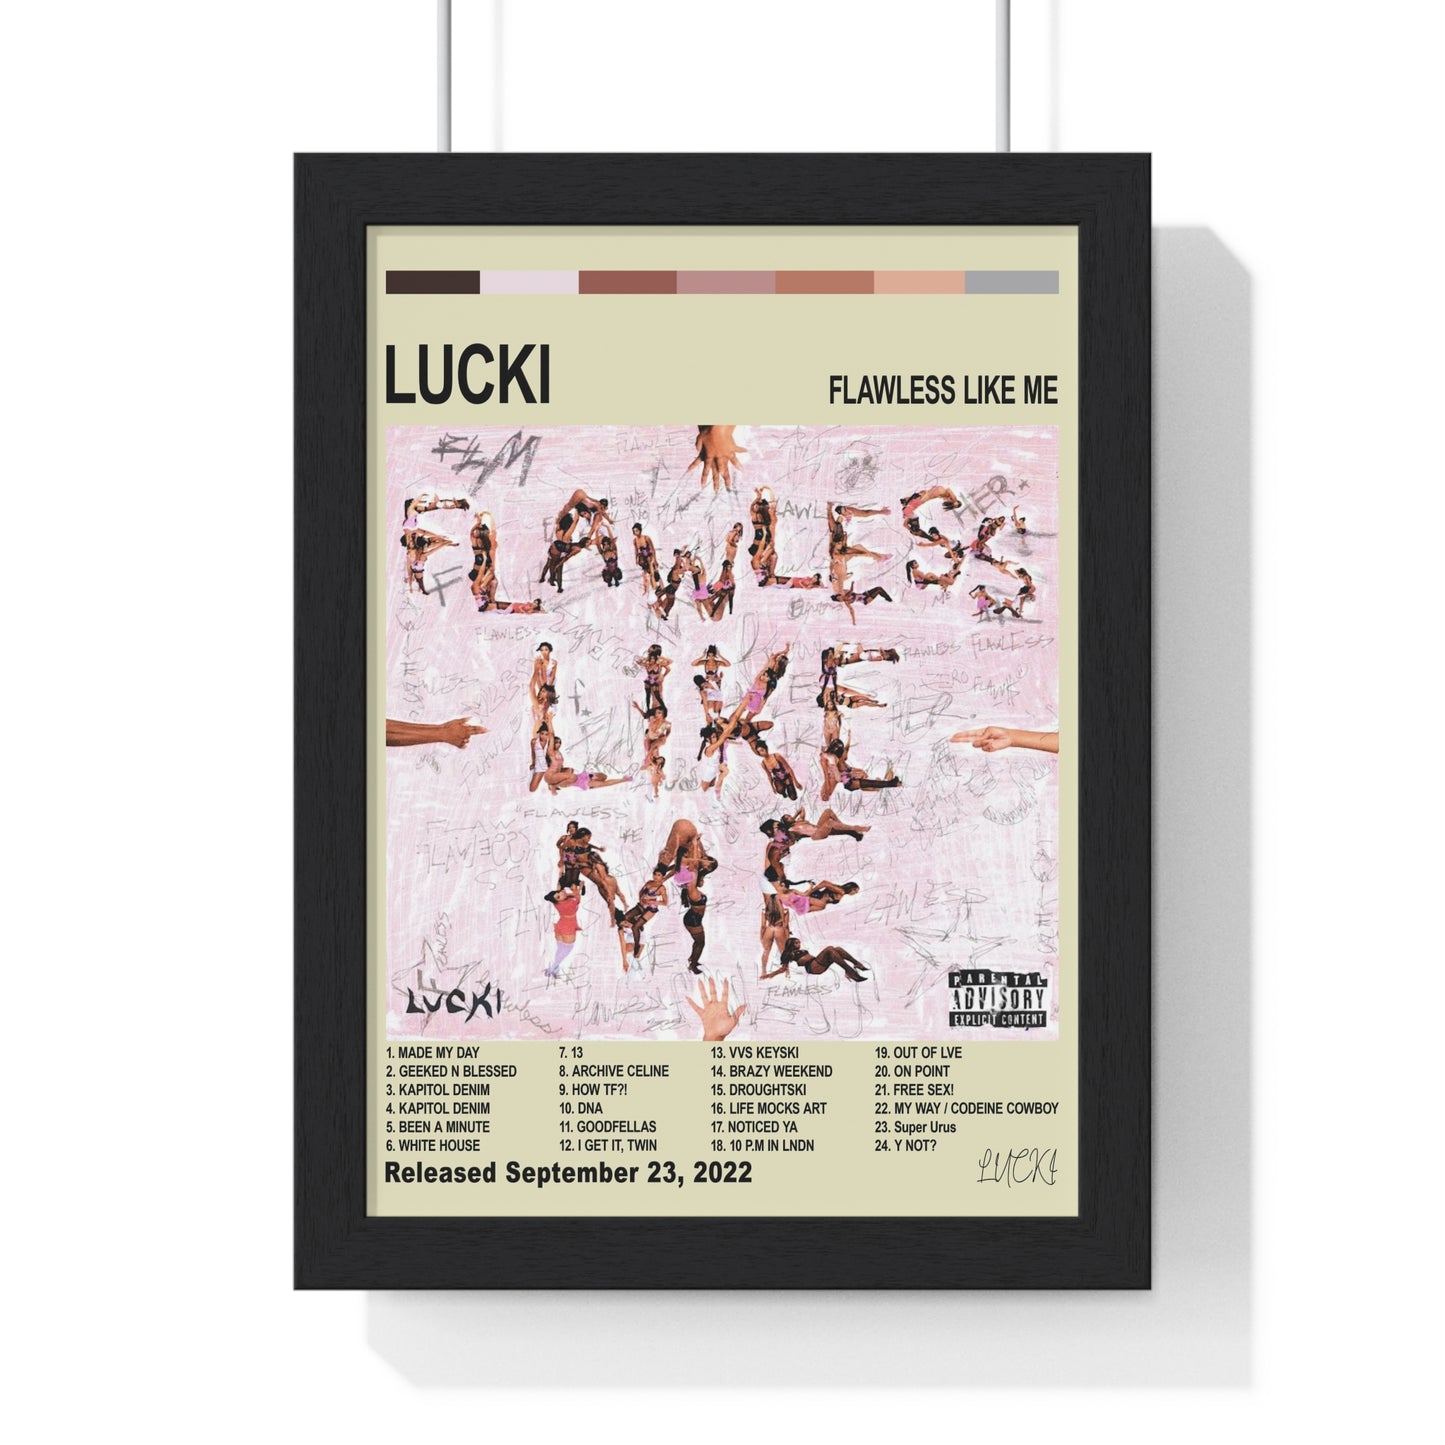 LUCKI - FLAWLESS LIKE ME Album Cover Poster